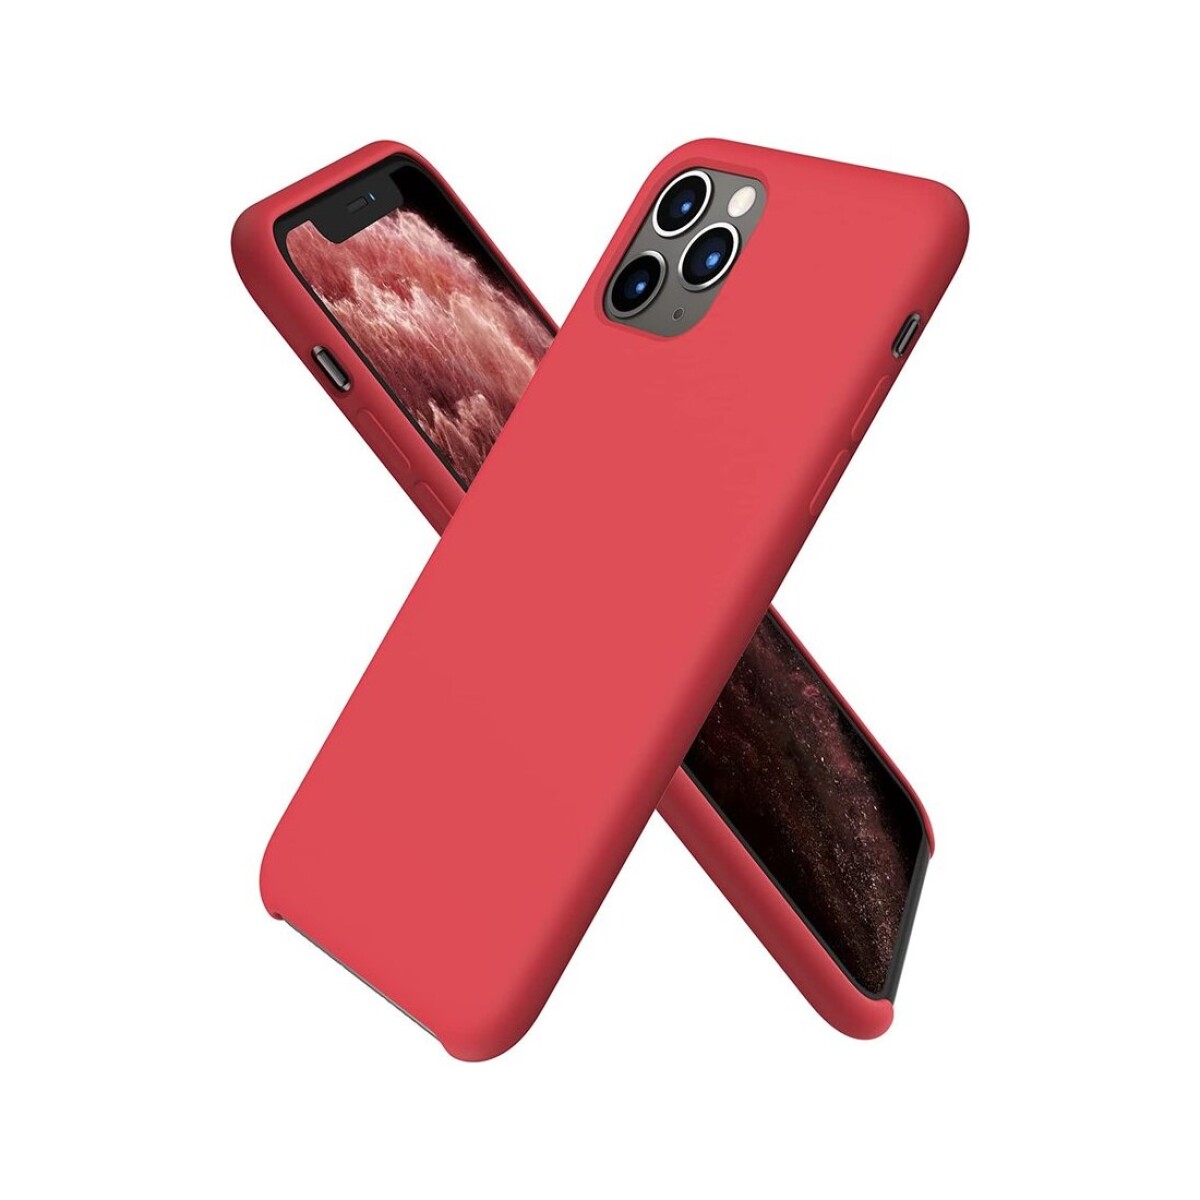 Protector case de silicona para iphone 11 pro max - Rojo 